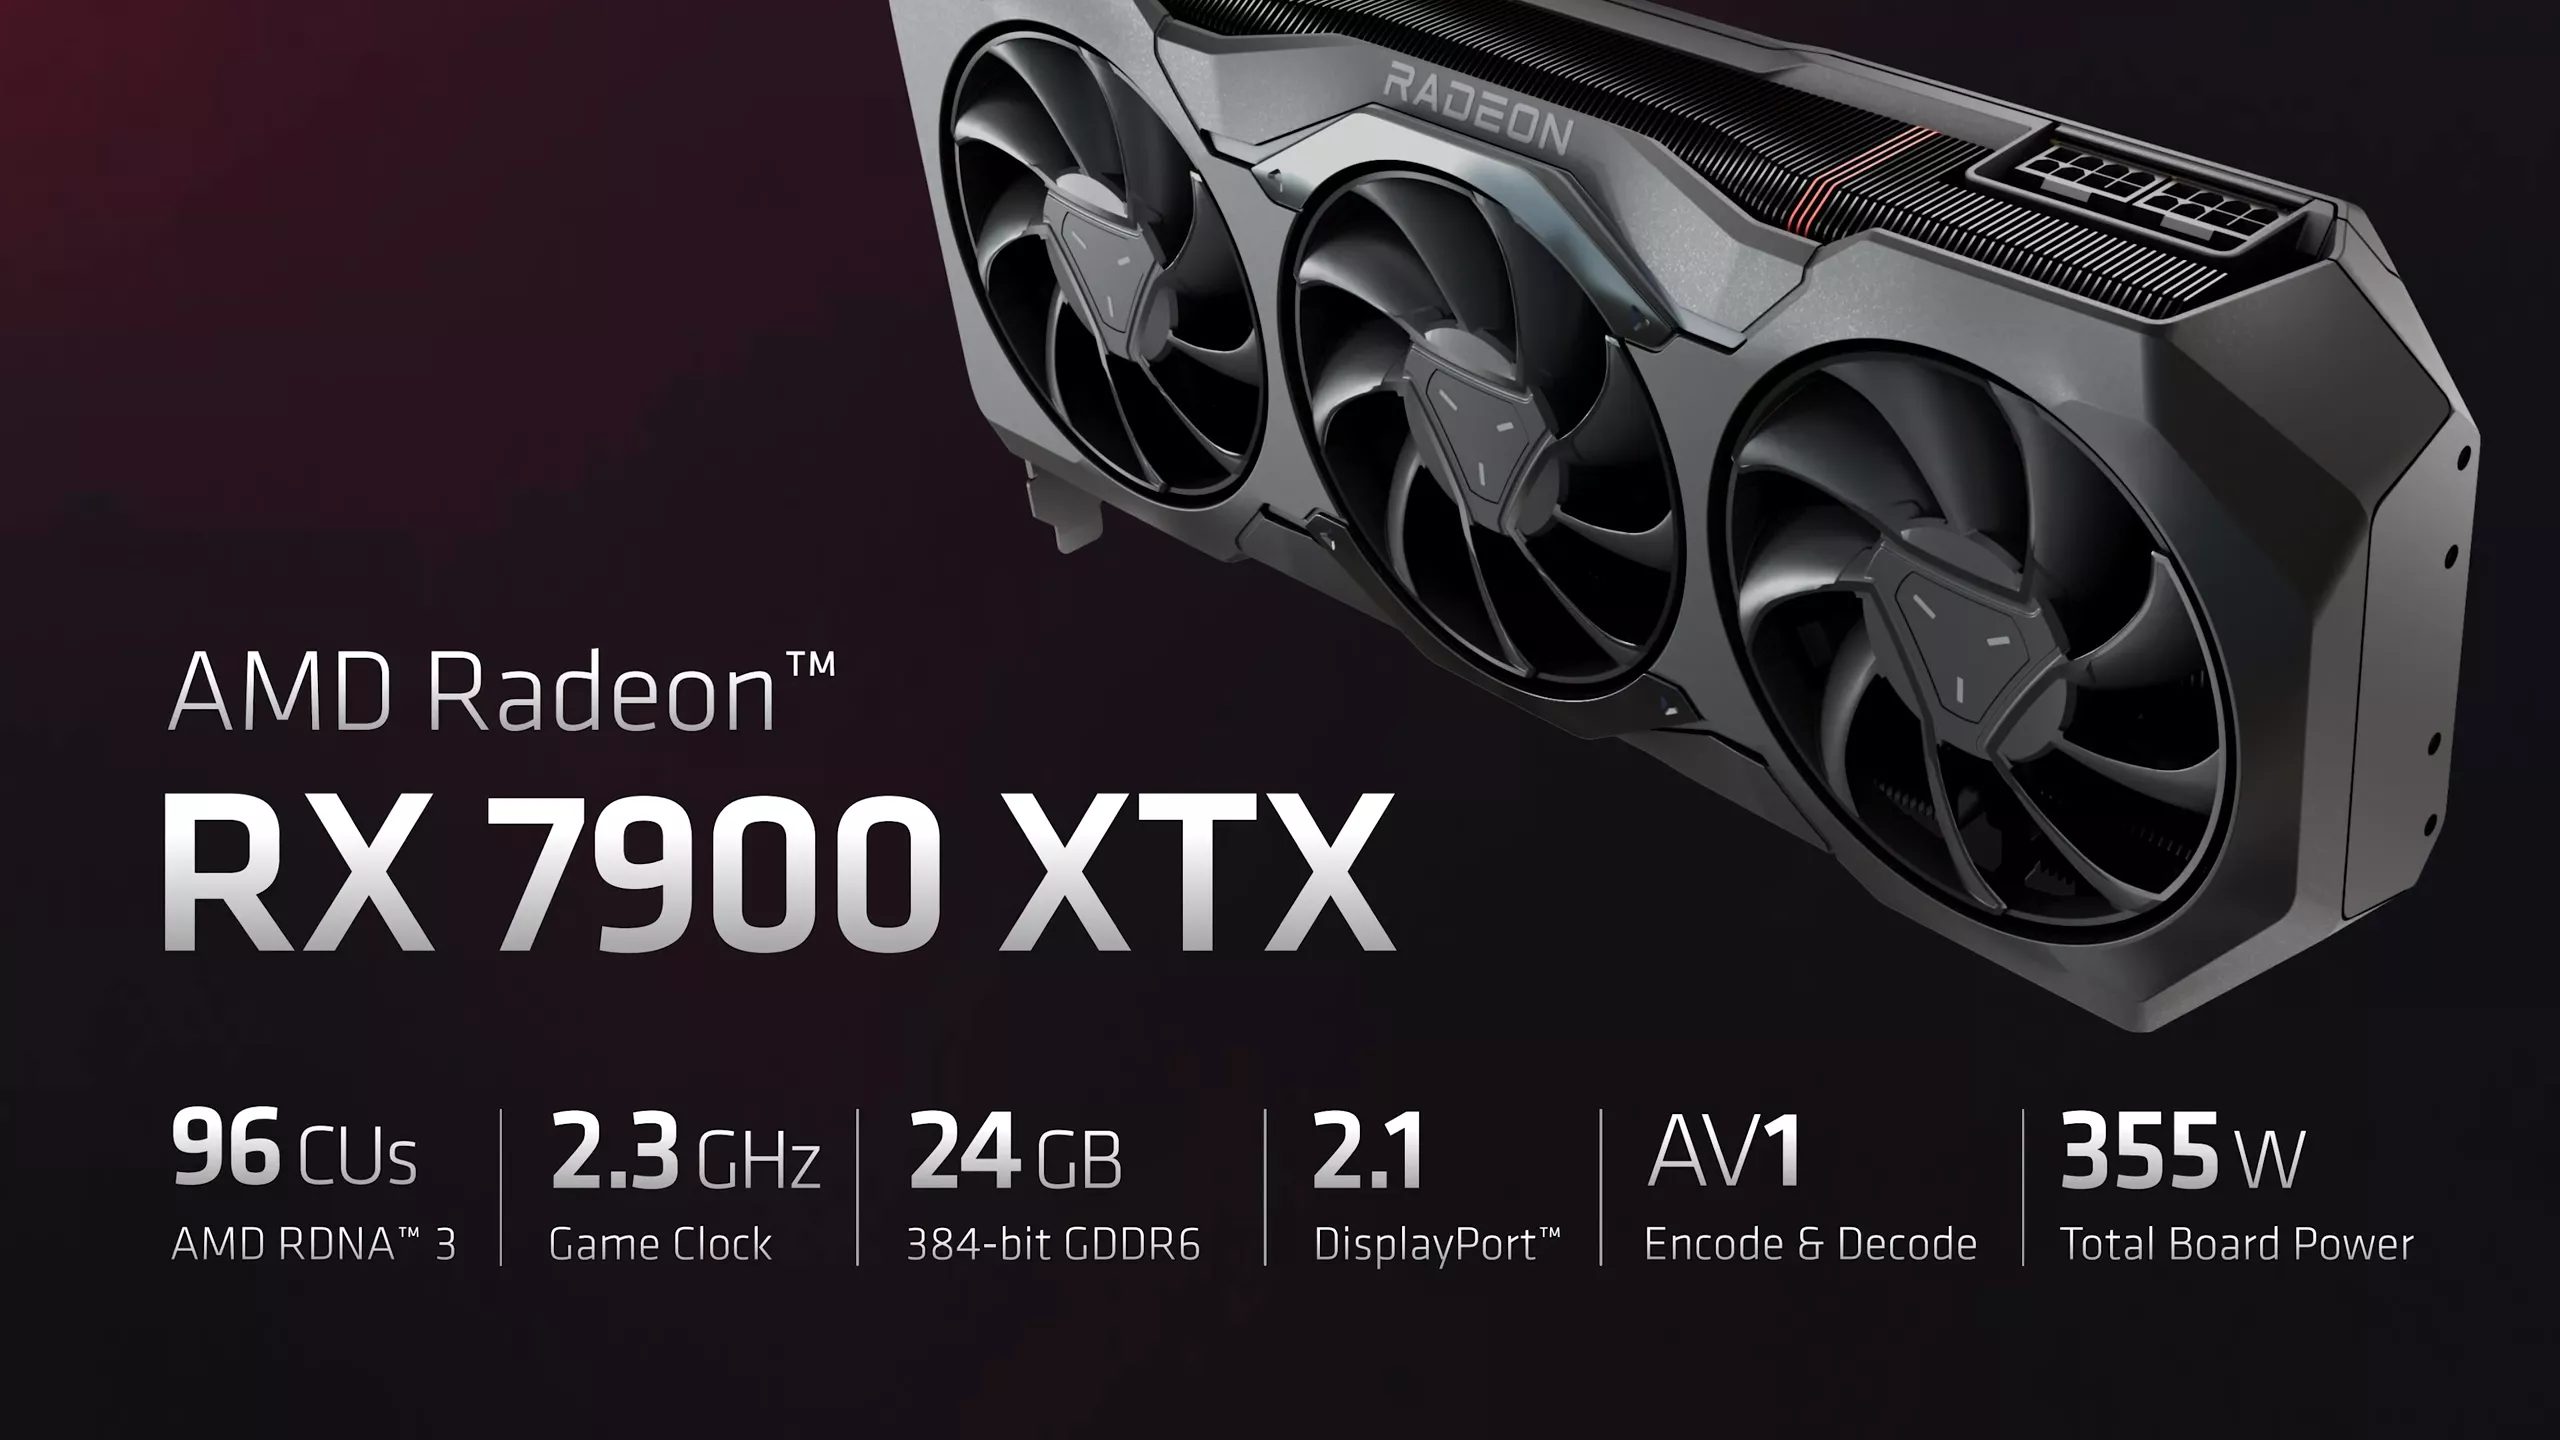 AMD Radeon RX 7900 XTX and Radeon RX 7900 XT